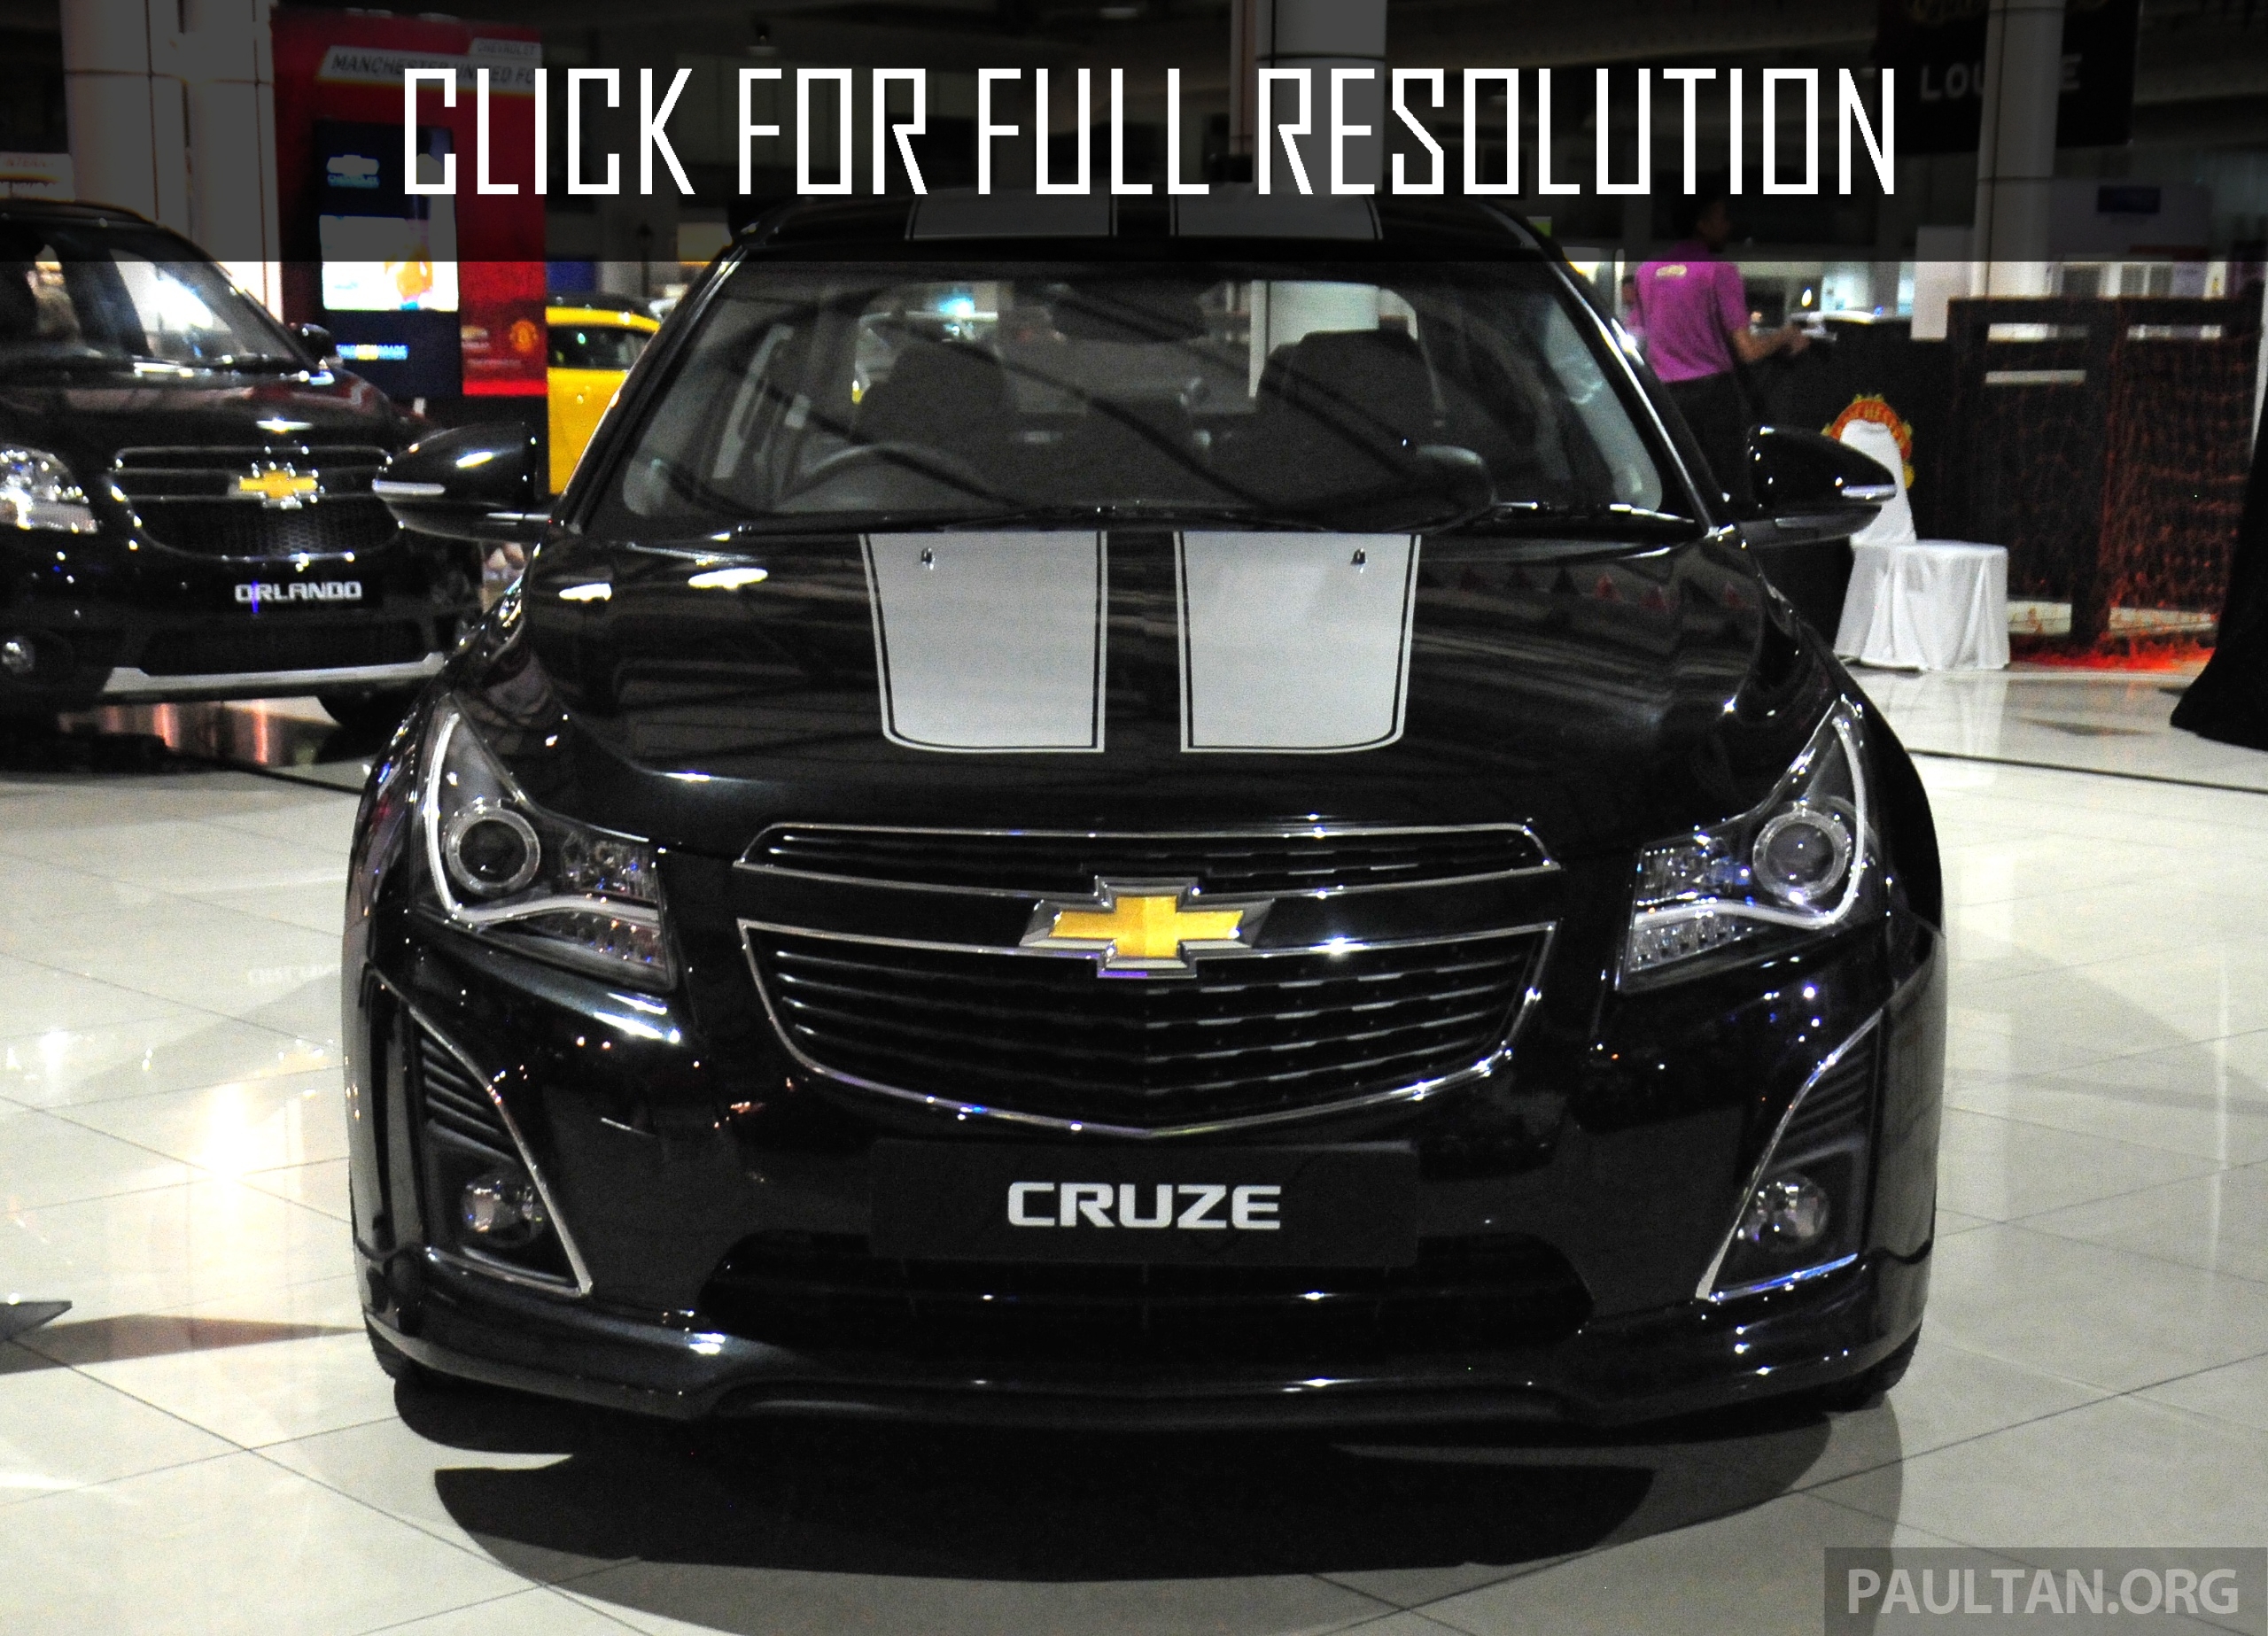 Chevrolet Cruze Black Edition